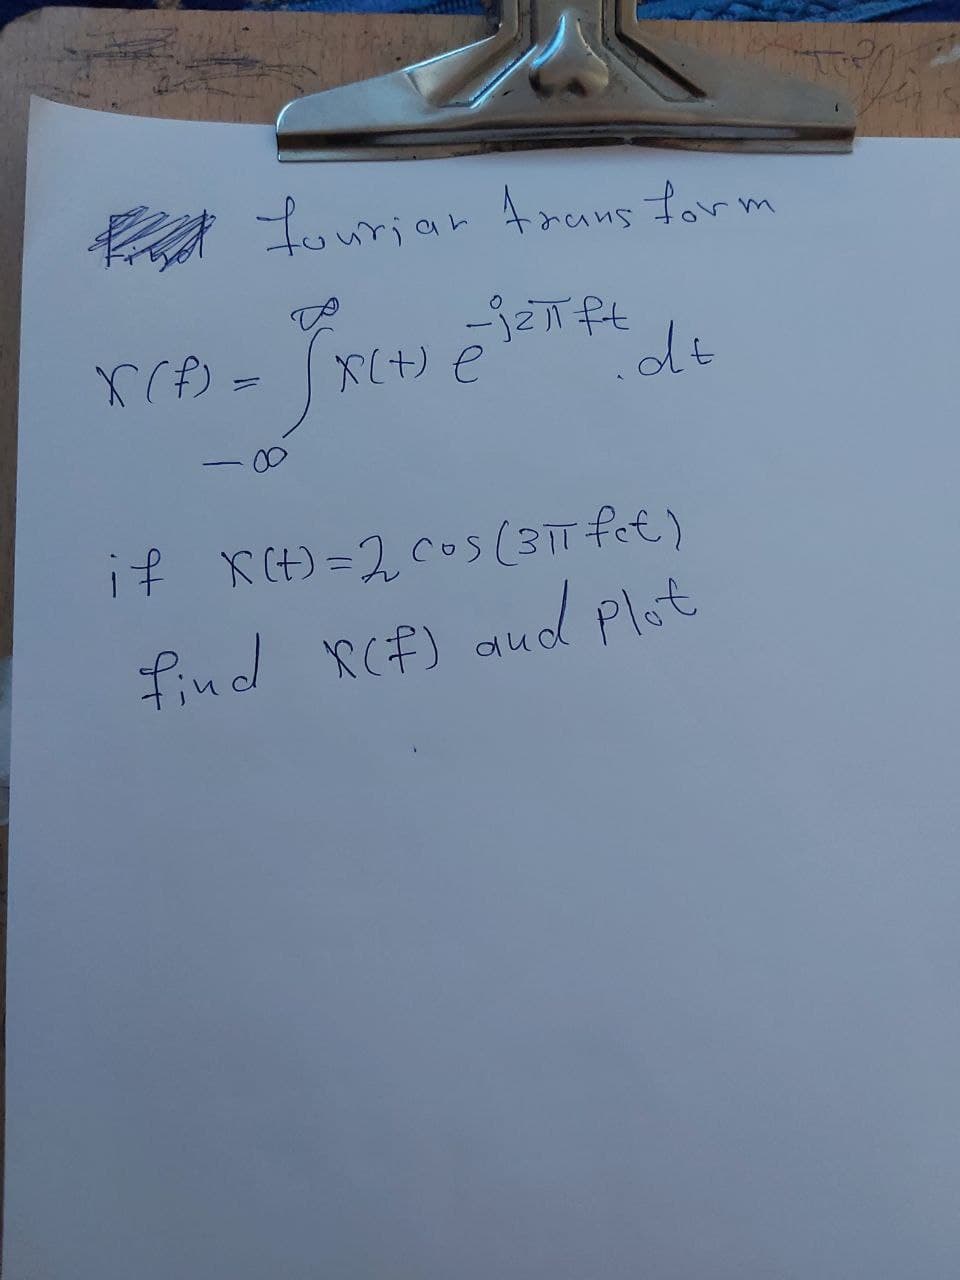 X(f)
fourian transform
-jzπ ft
-
=
X(+) e
dt
if X(t)=2₂ Cos (3πT fet)
find X(f) and plot